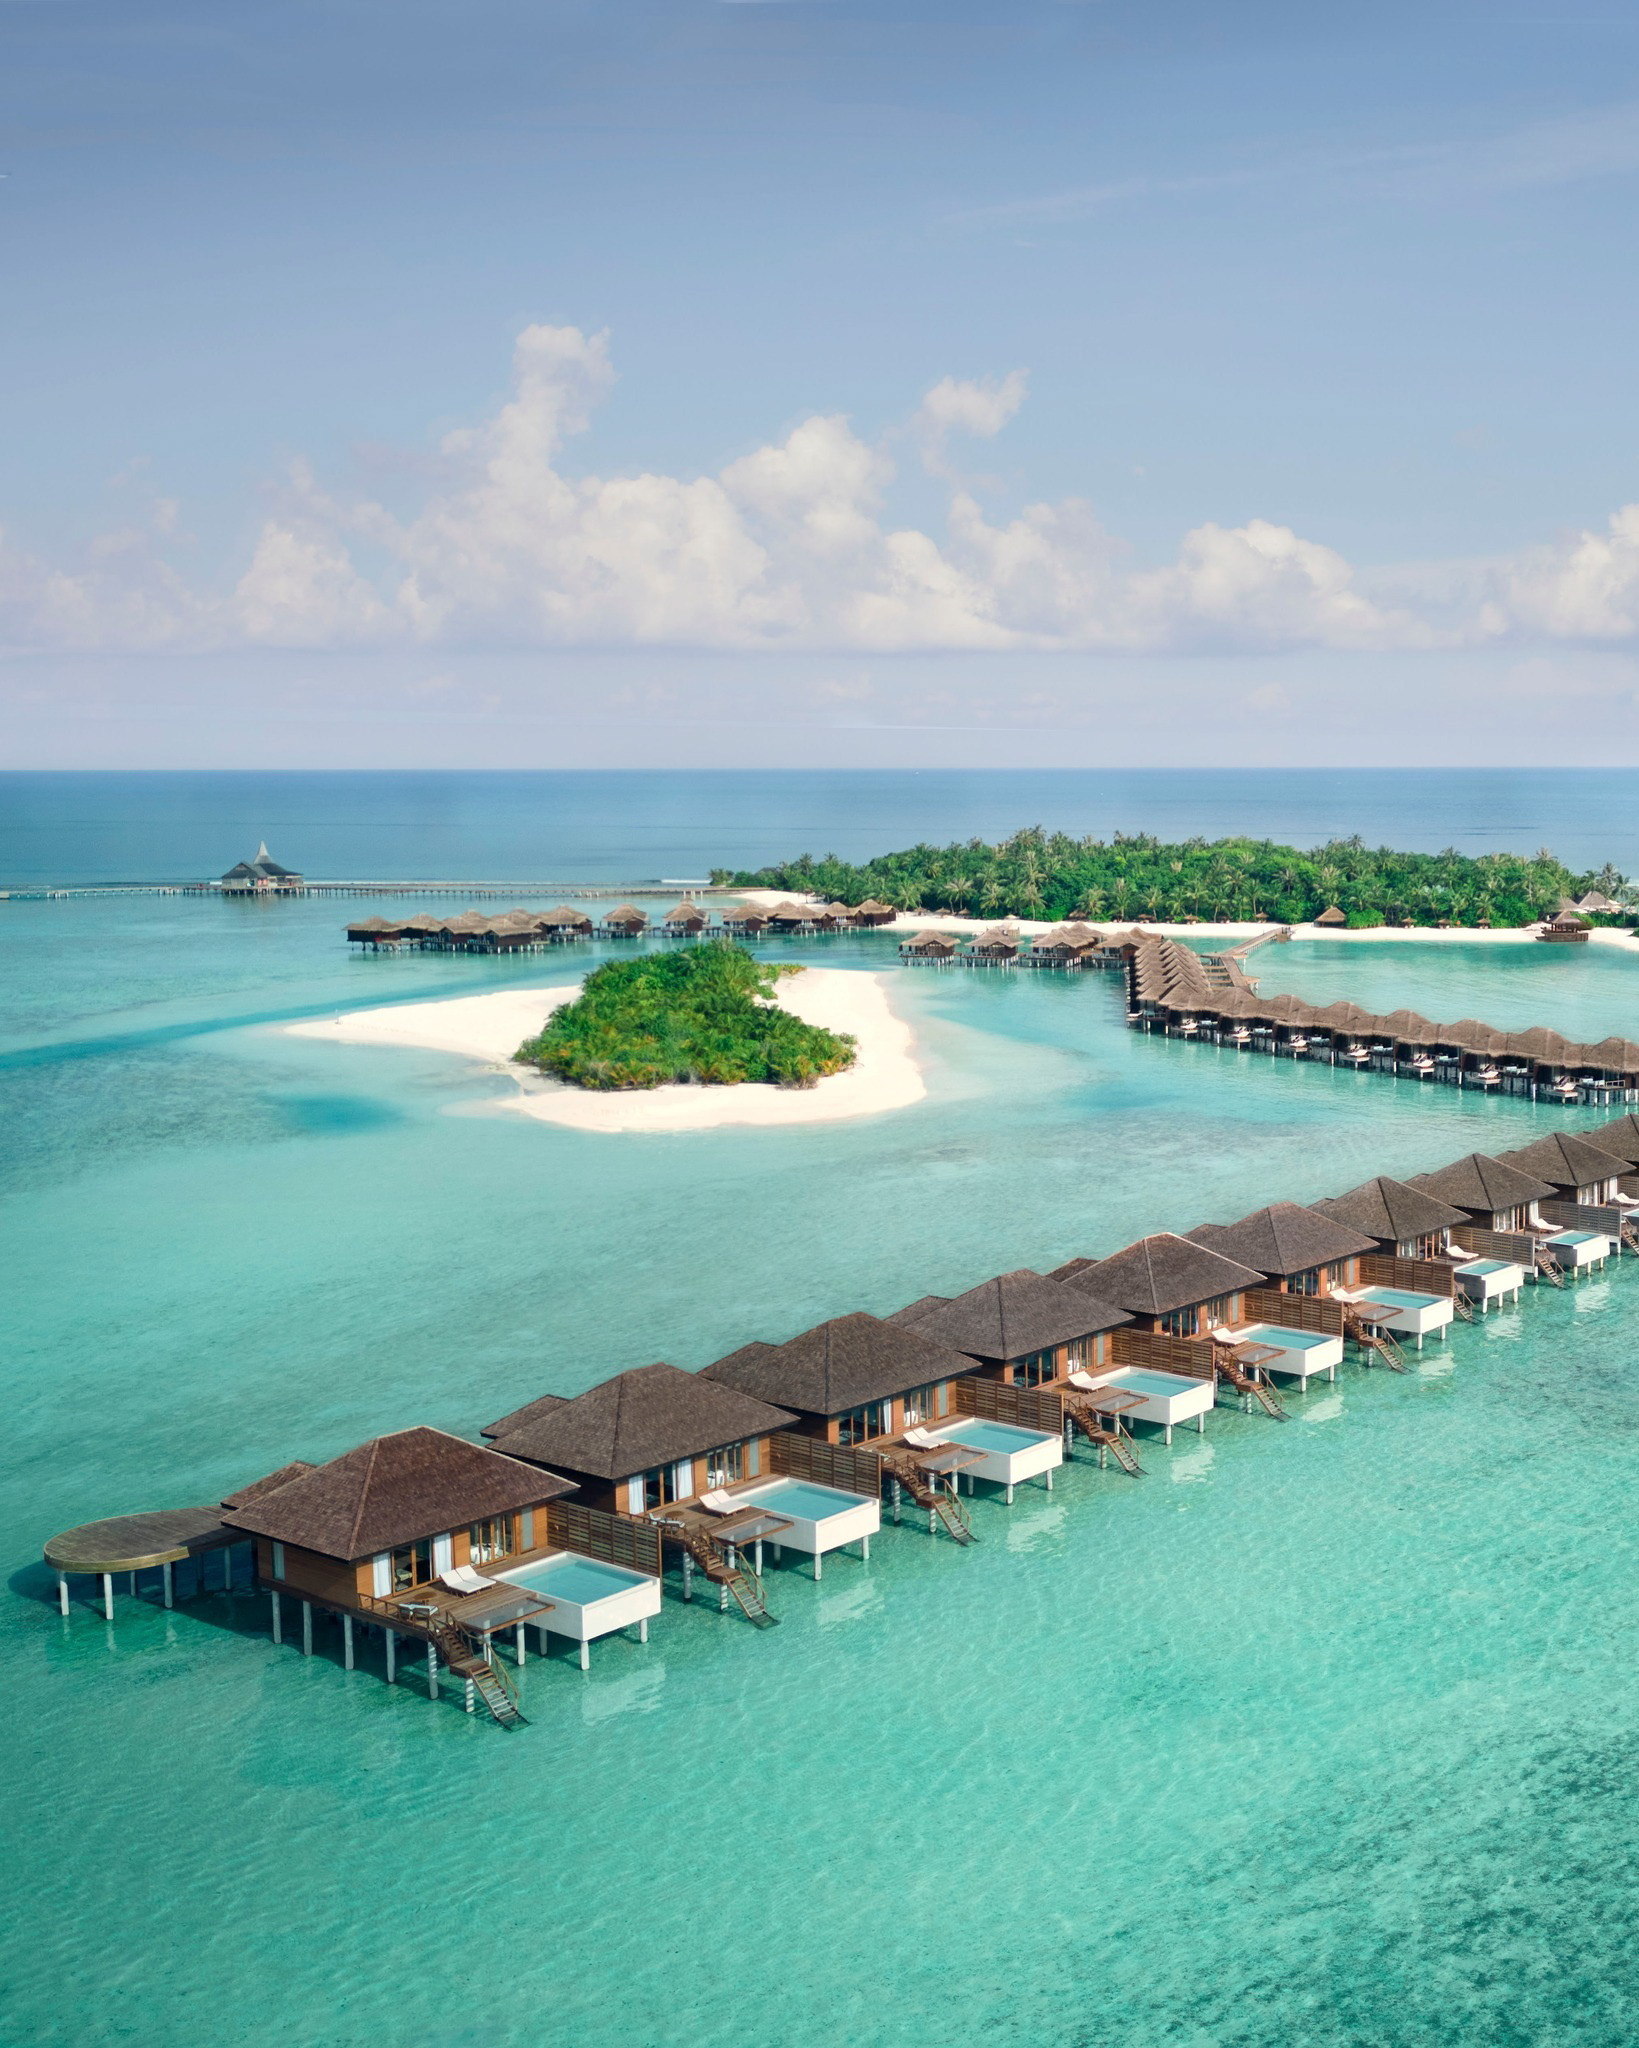 Anantara Veli Maldives Resort – South Male Atoll, Maldives – Overwater Pool Villas Aerial View